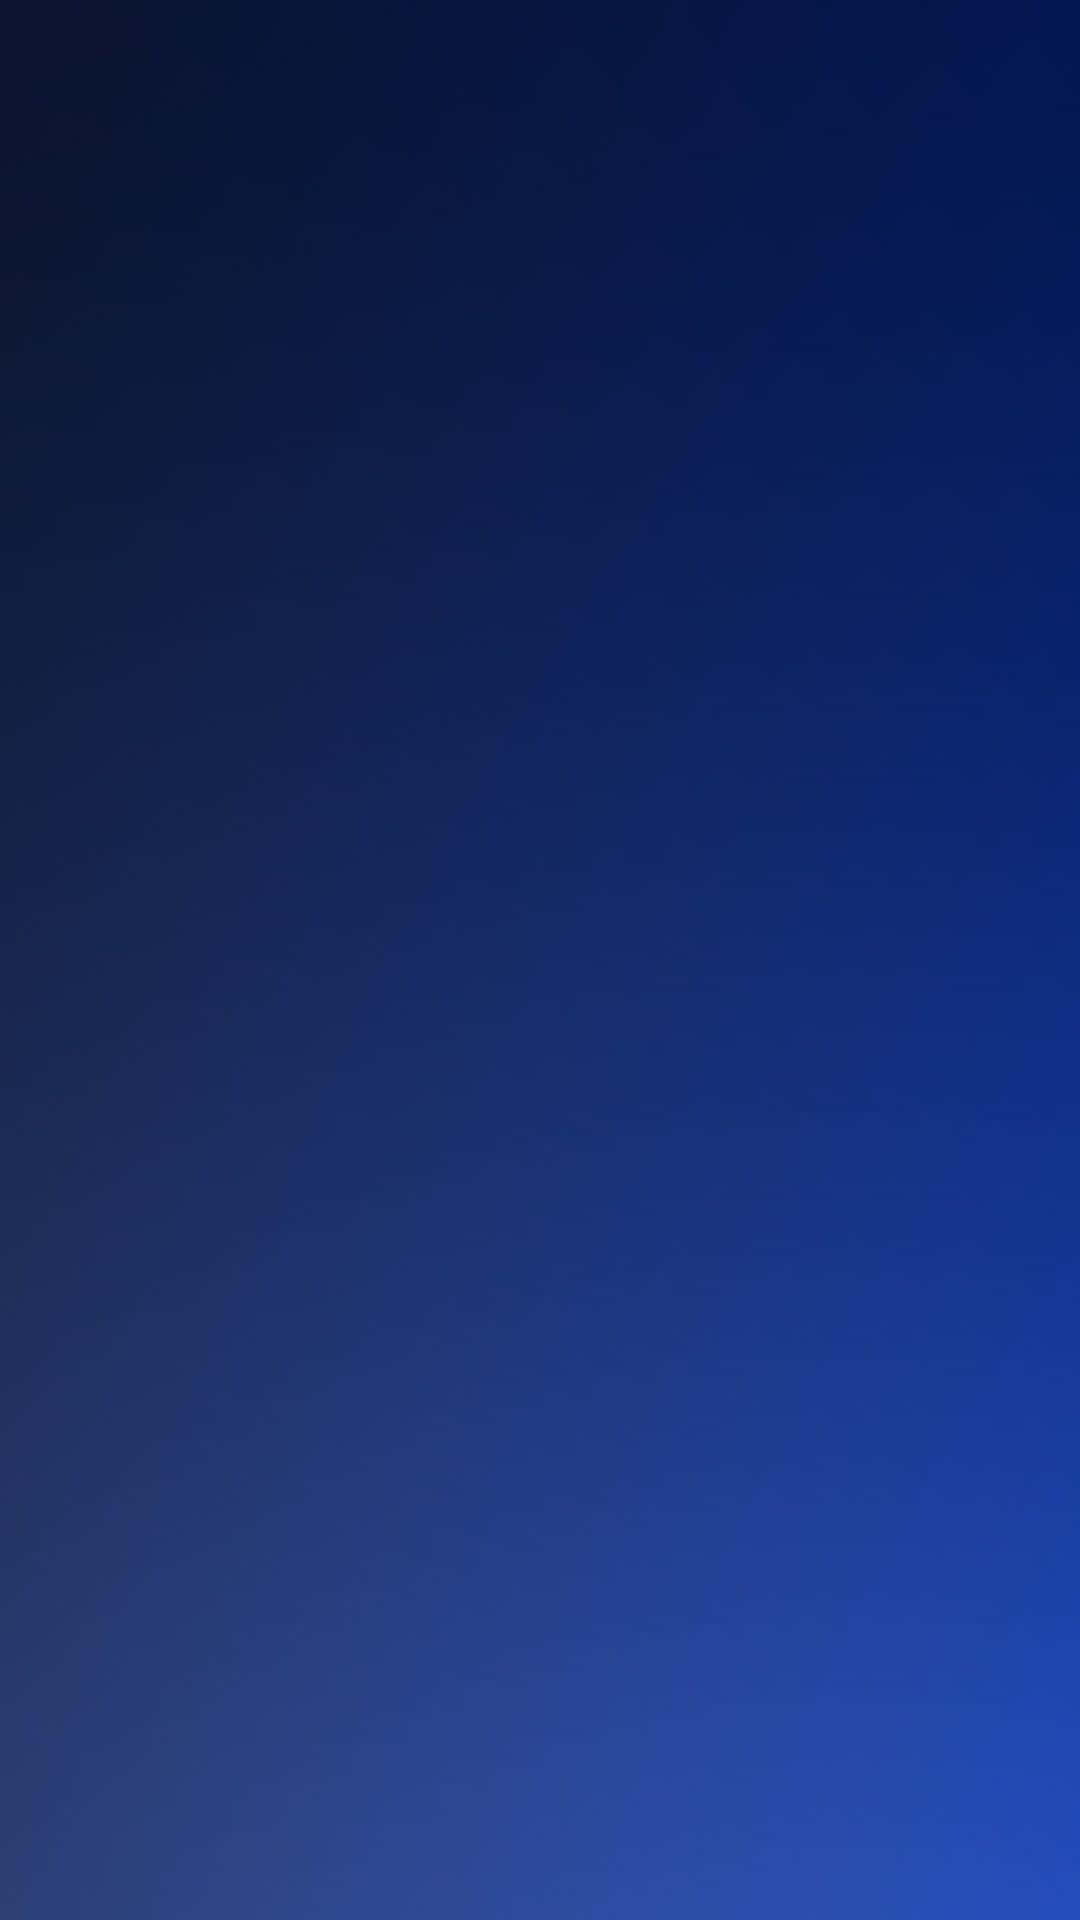 Blue Screen Background